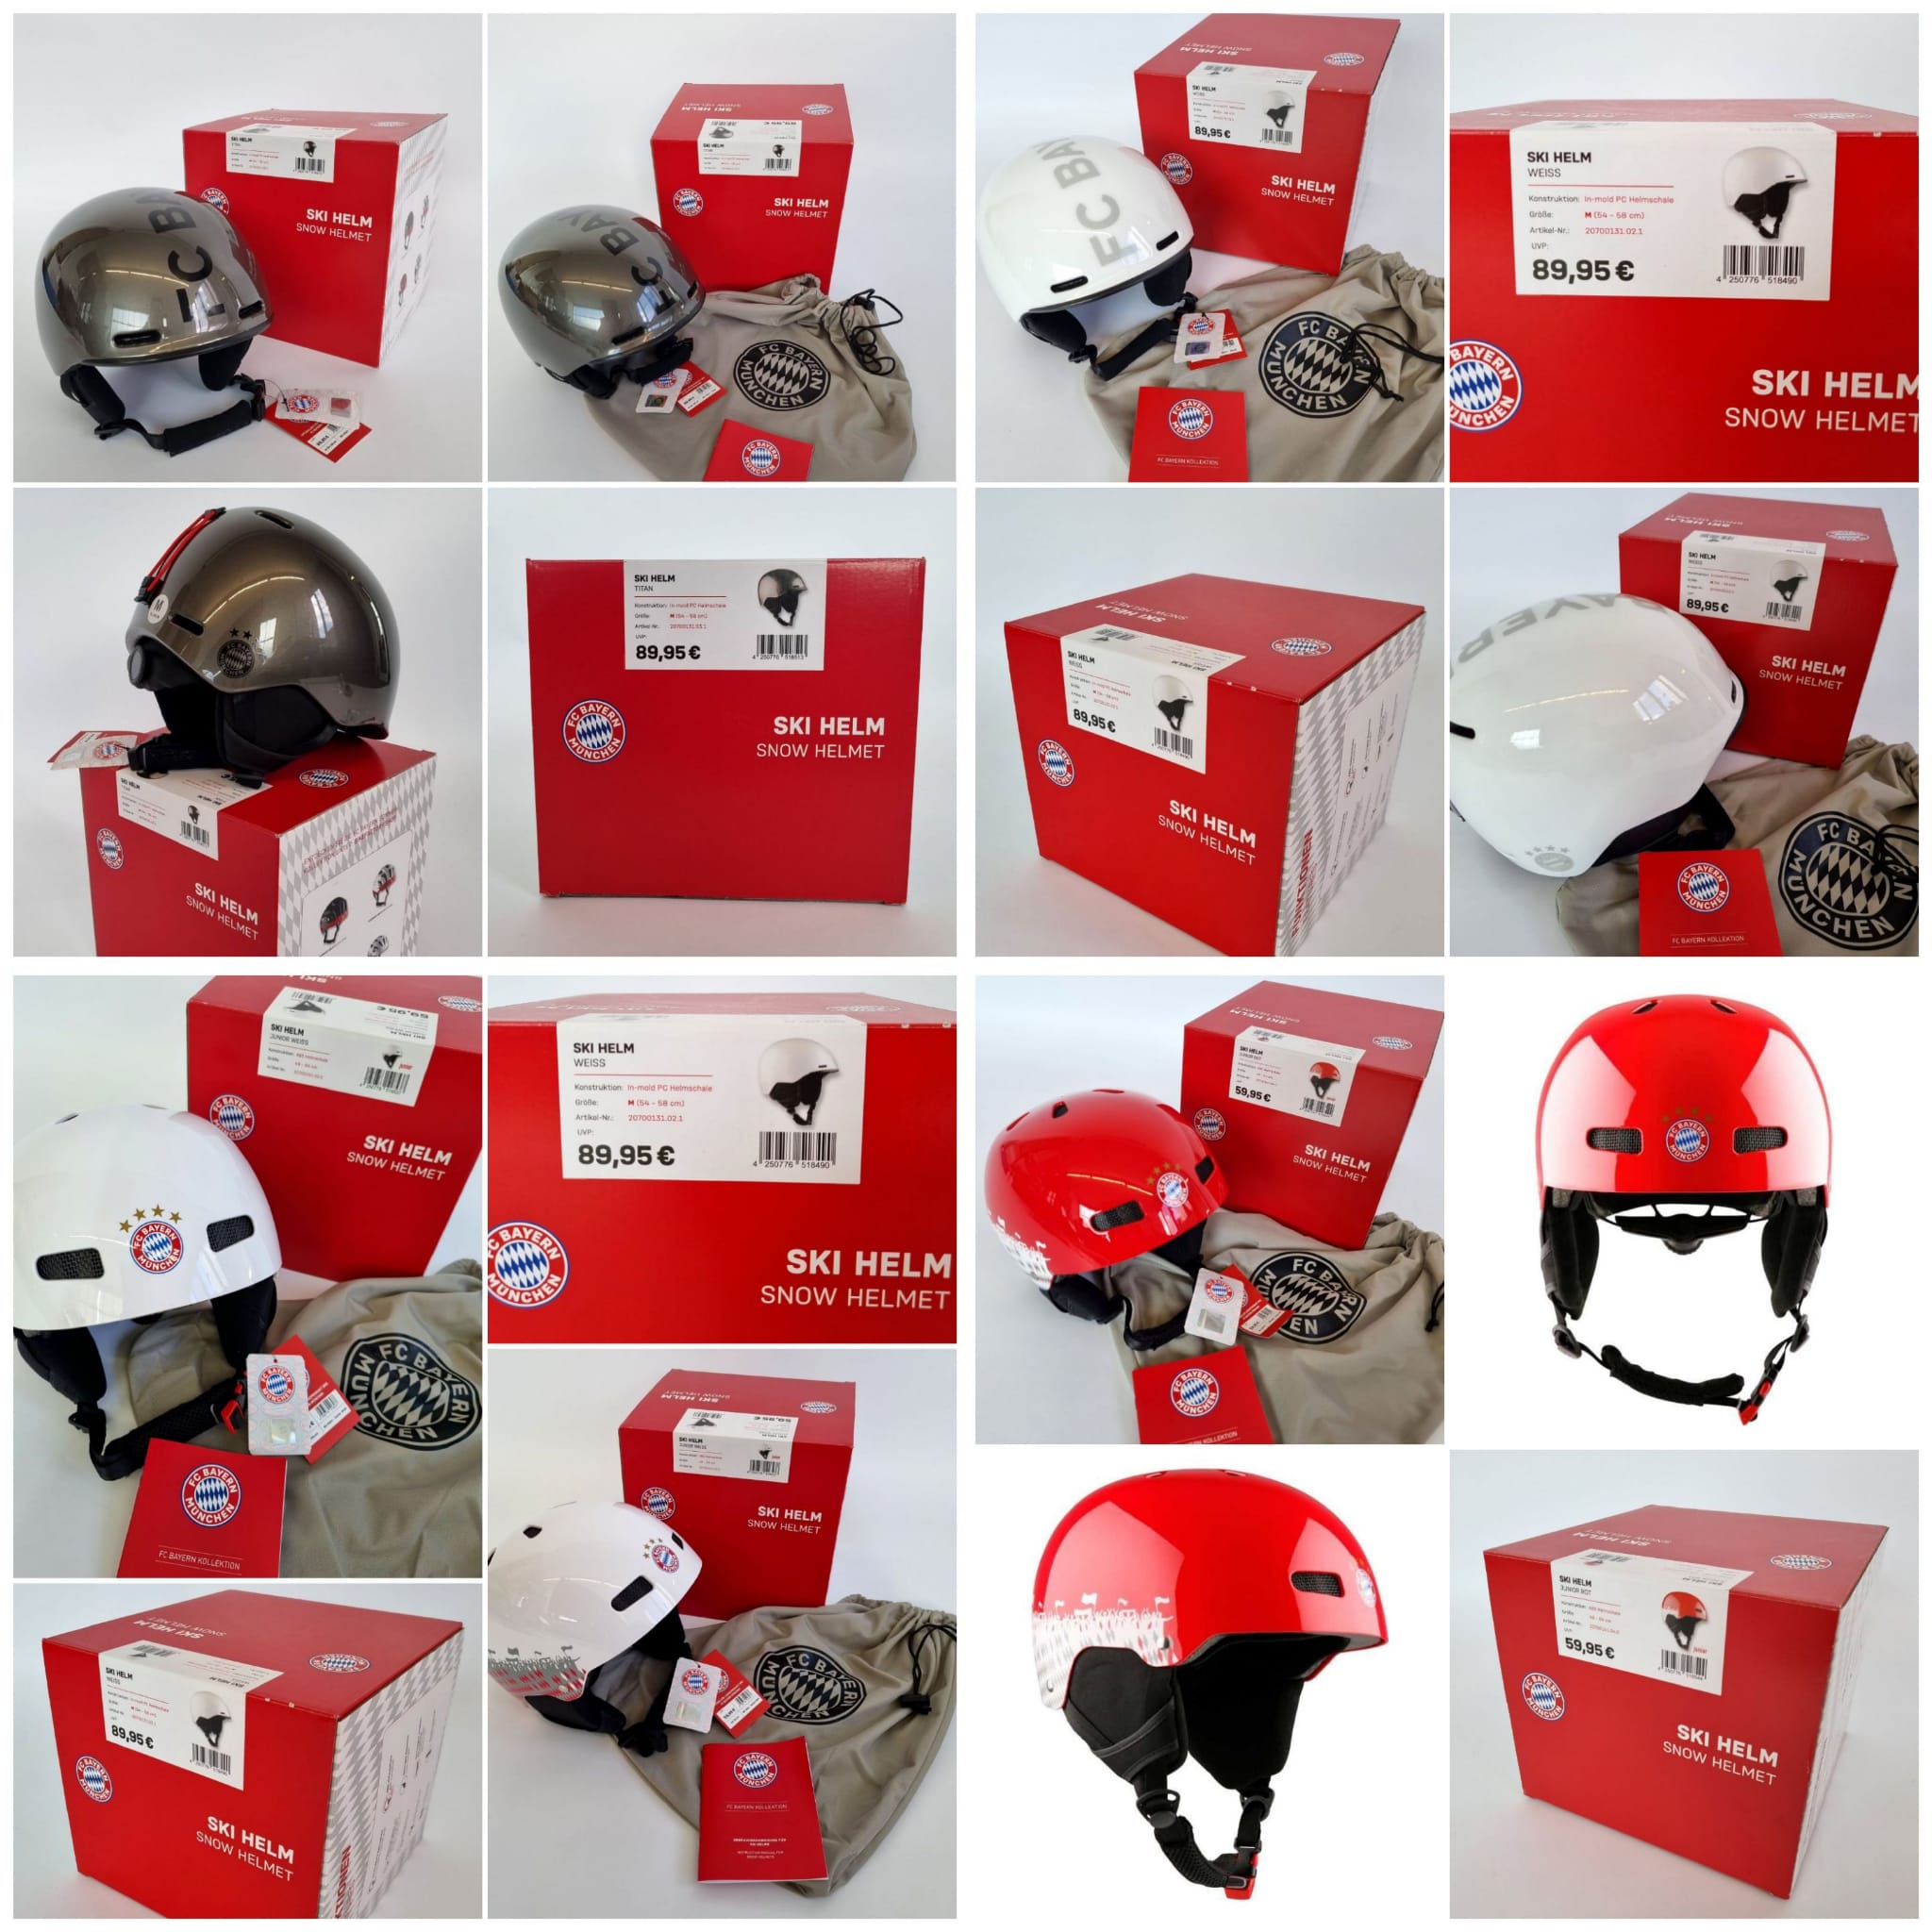 Ski helmets from FC Bayern München